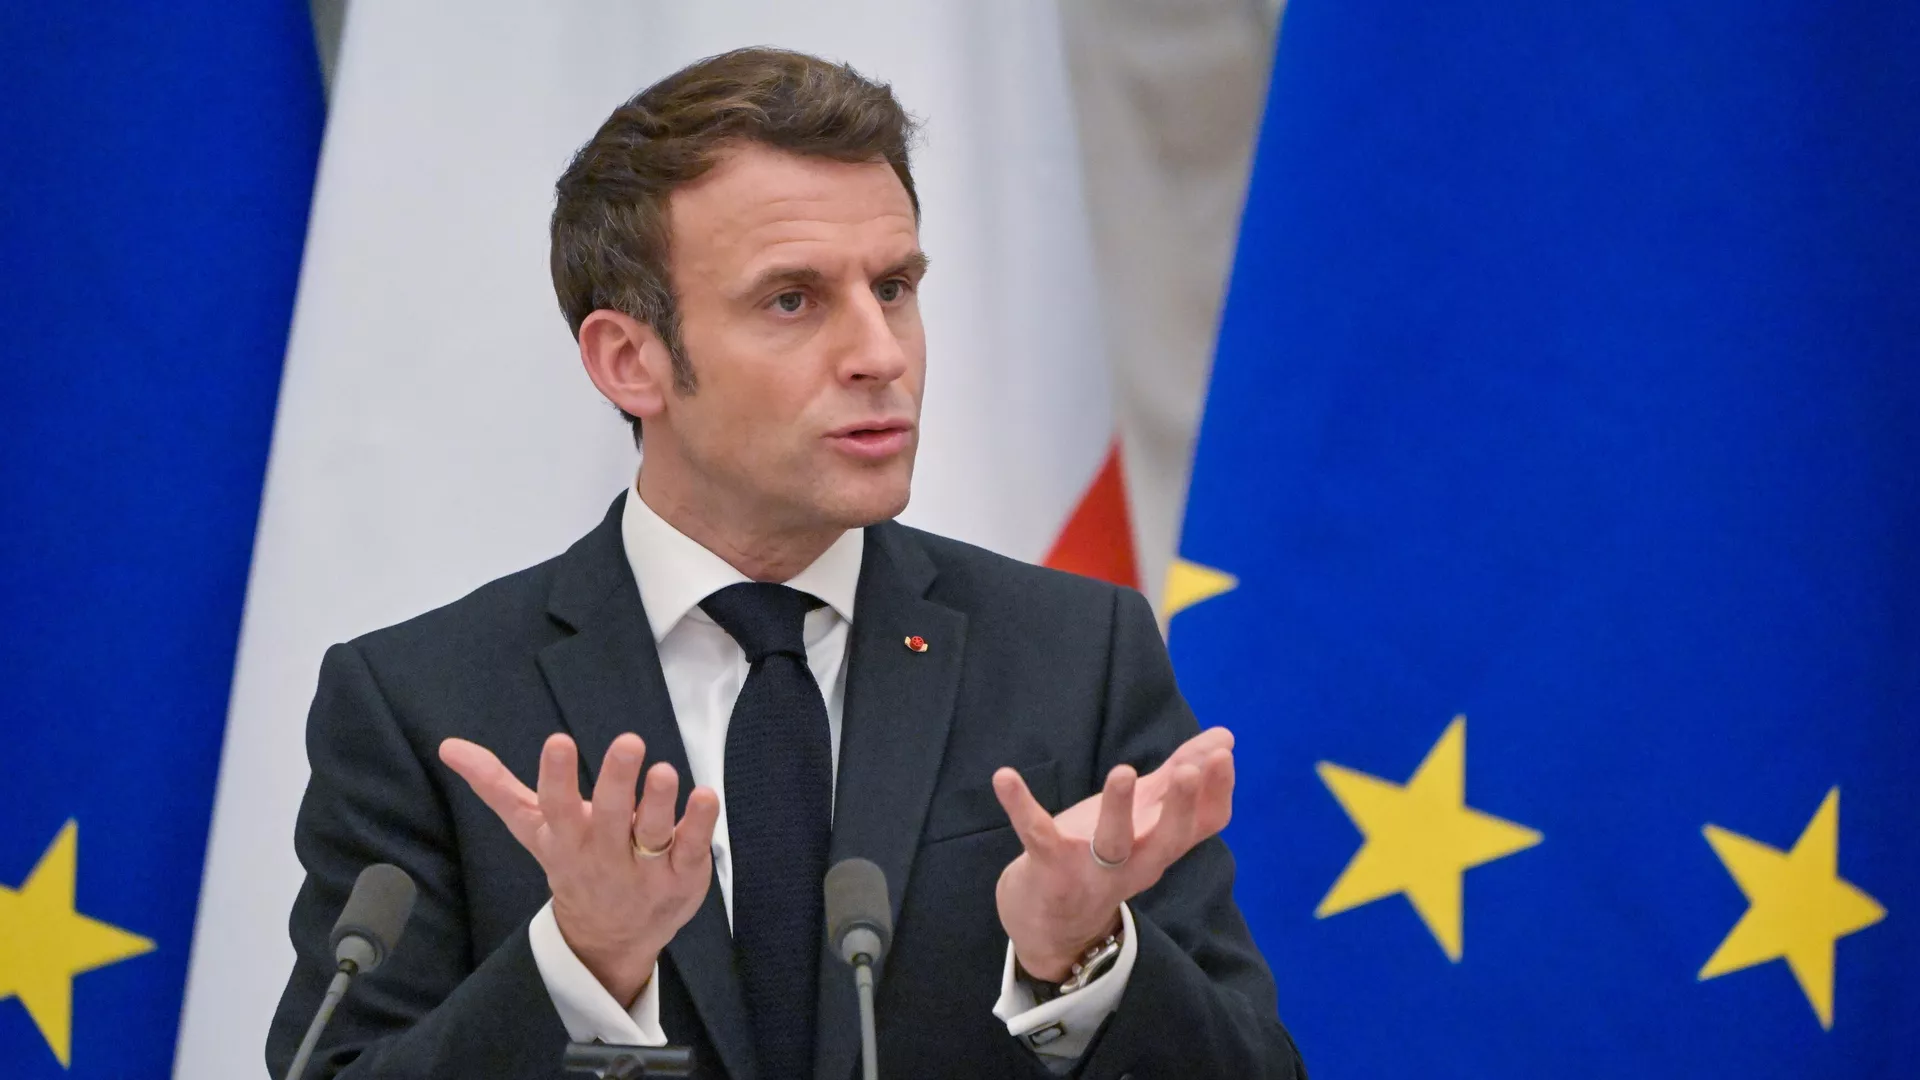 SAfrica: French President Emmanuel Macron not invited to BRICS Summit